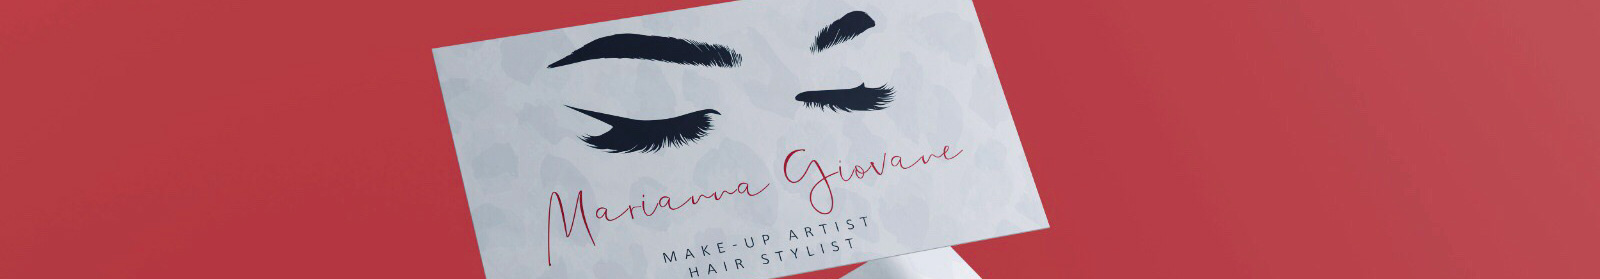 Marianna Giovane's profile banner